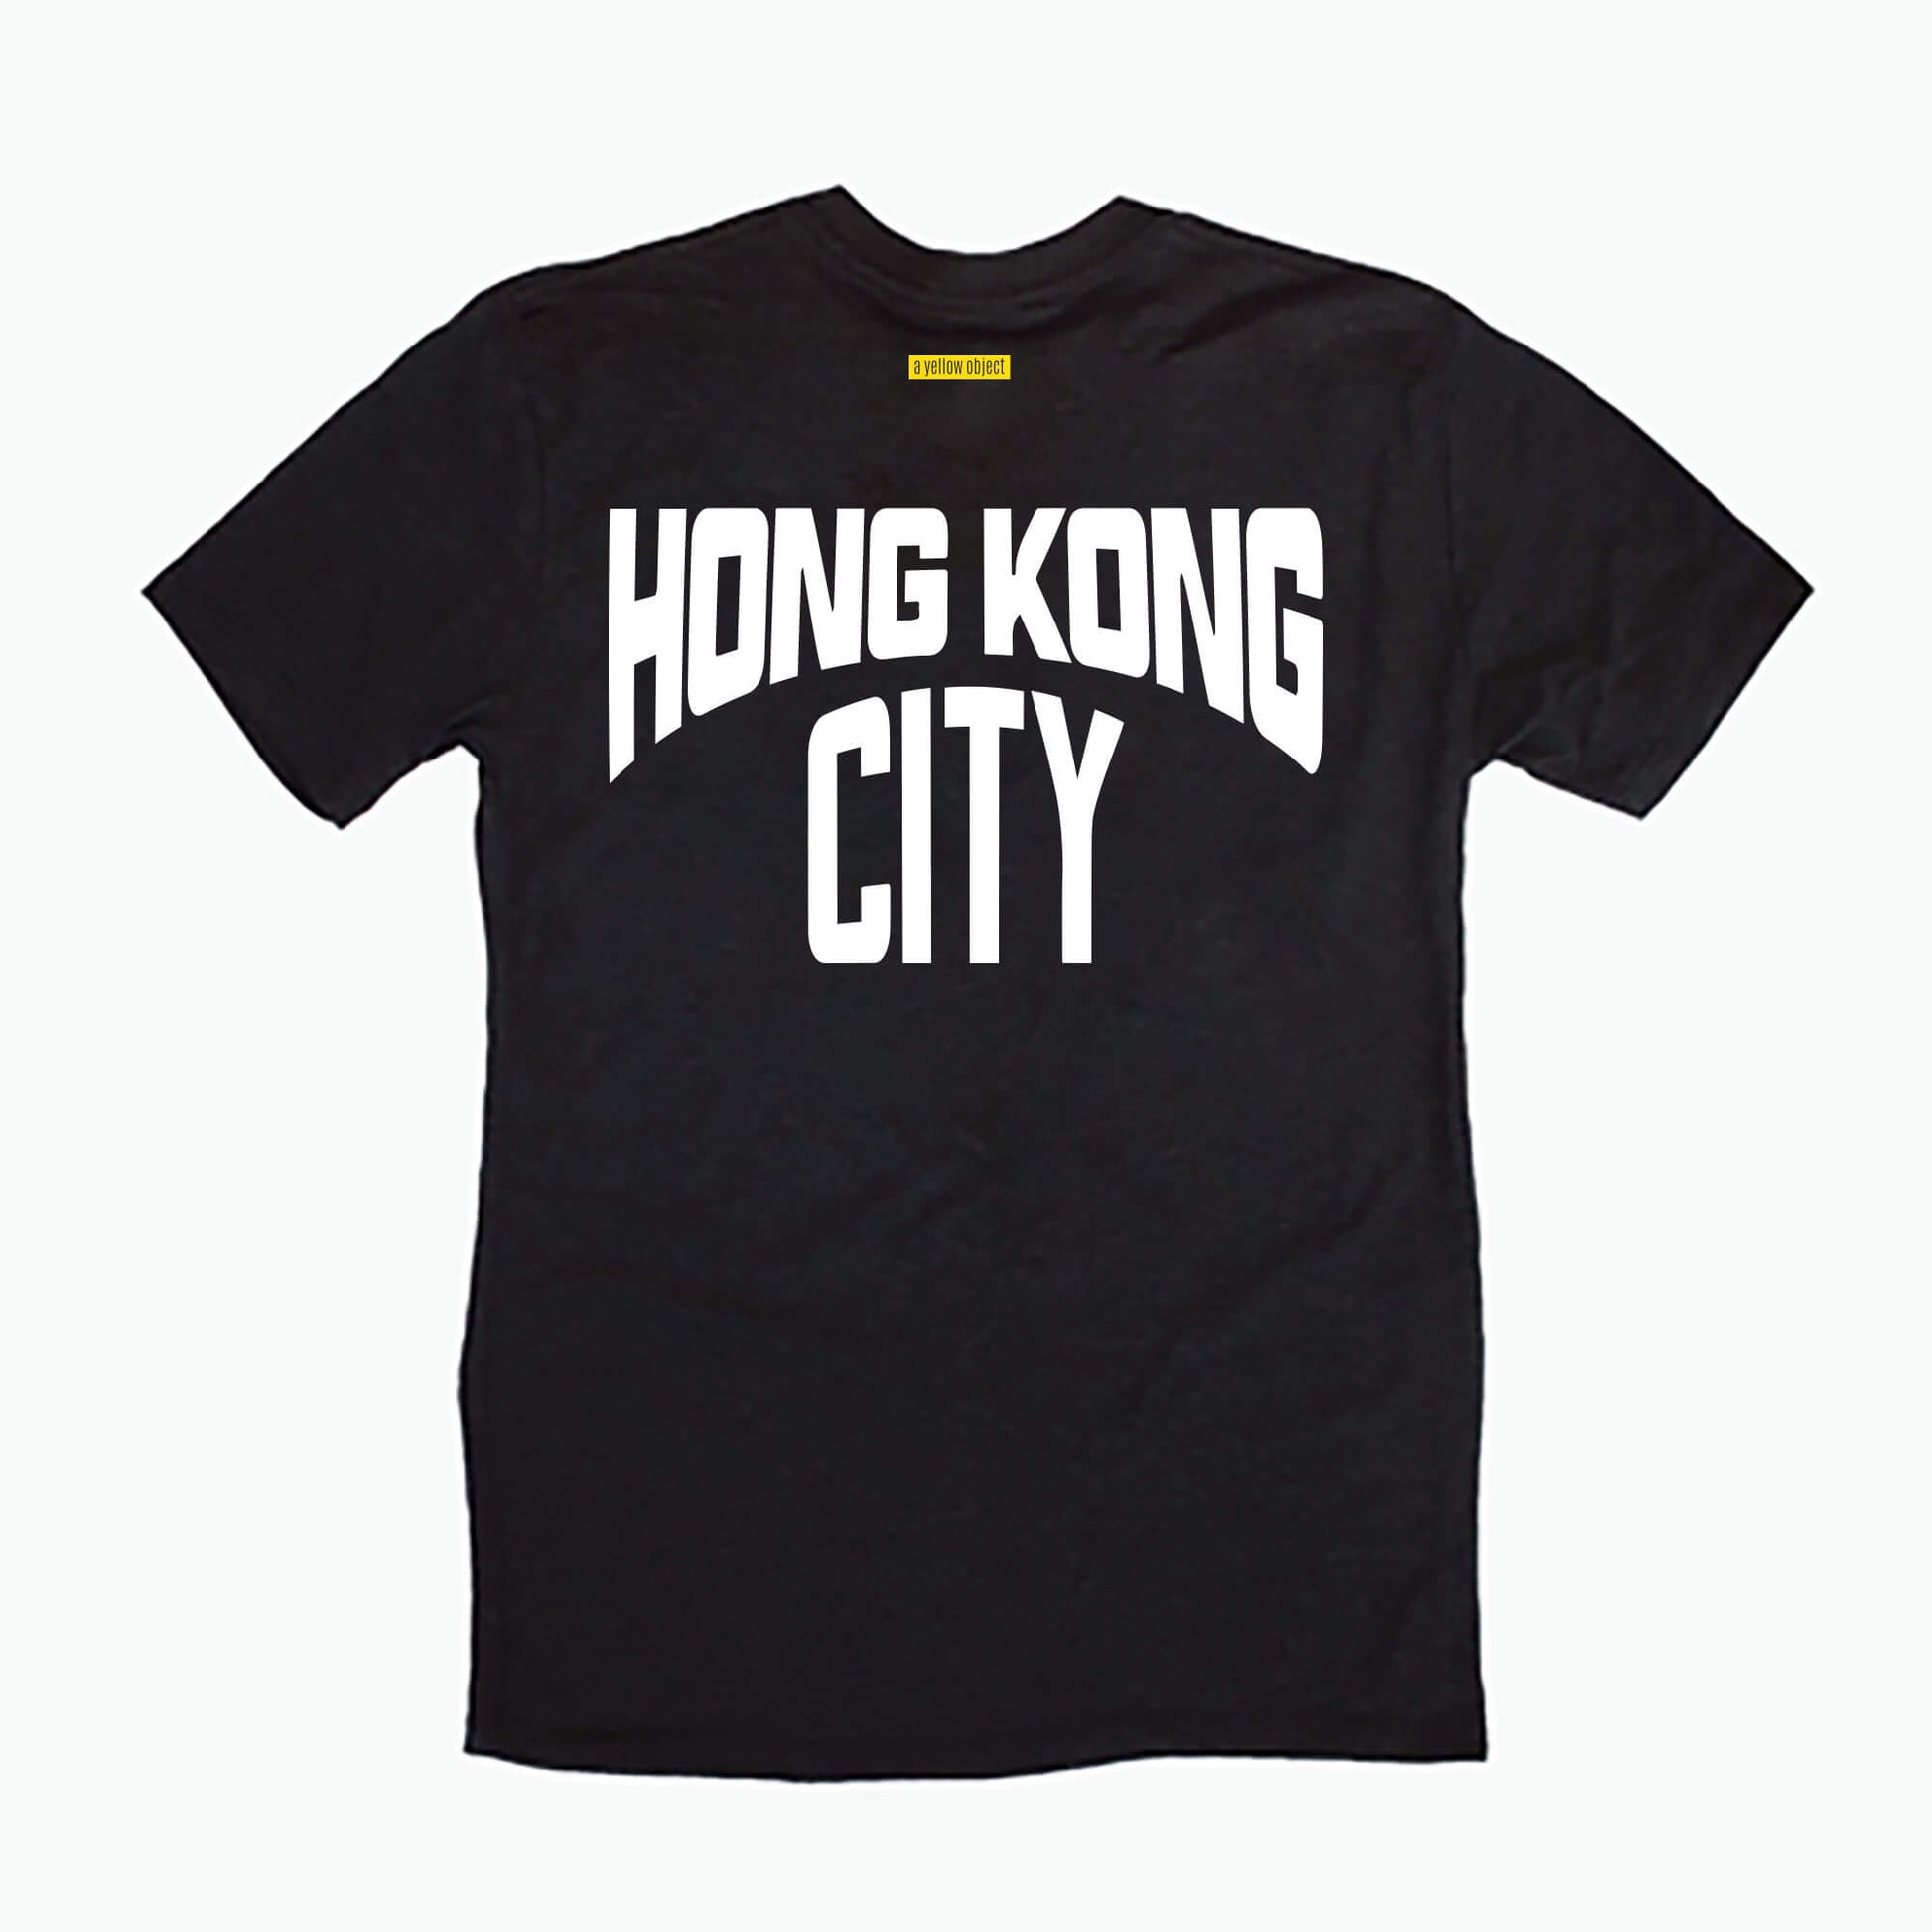 Hong Kong City T-Shirt (Black) - a yellow object